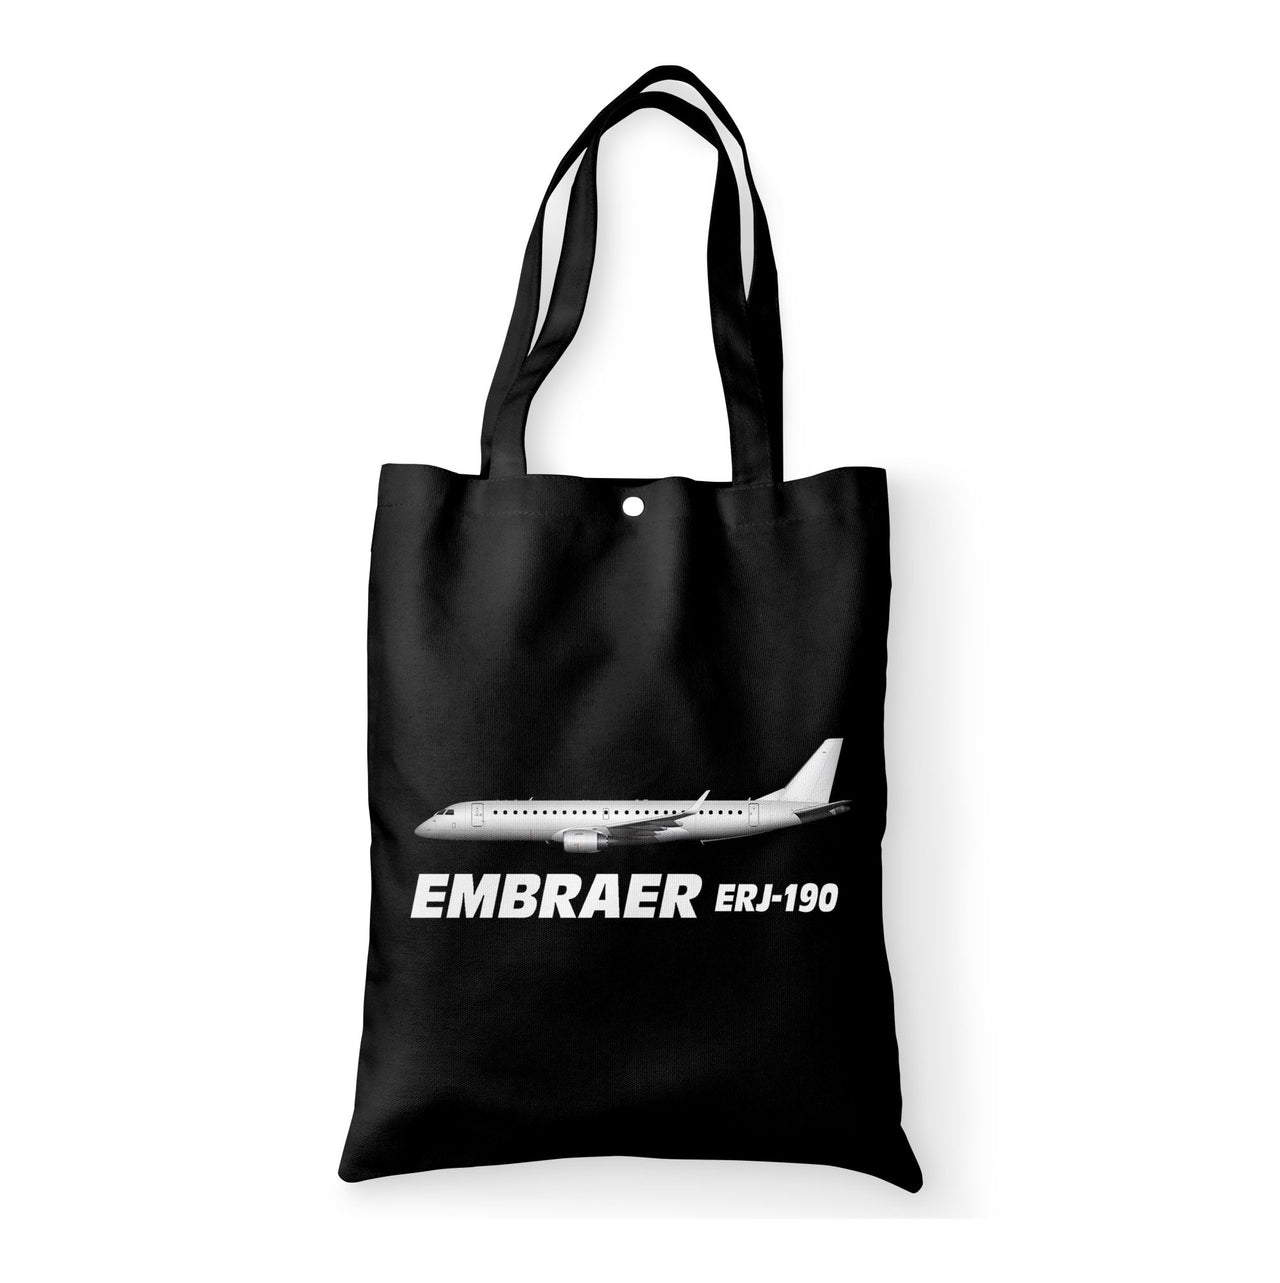 The Embraer ERJ-190 Designed Tote Bags